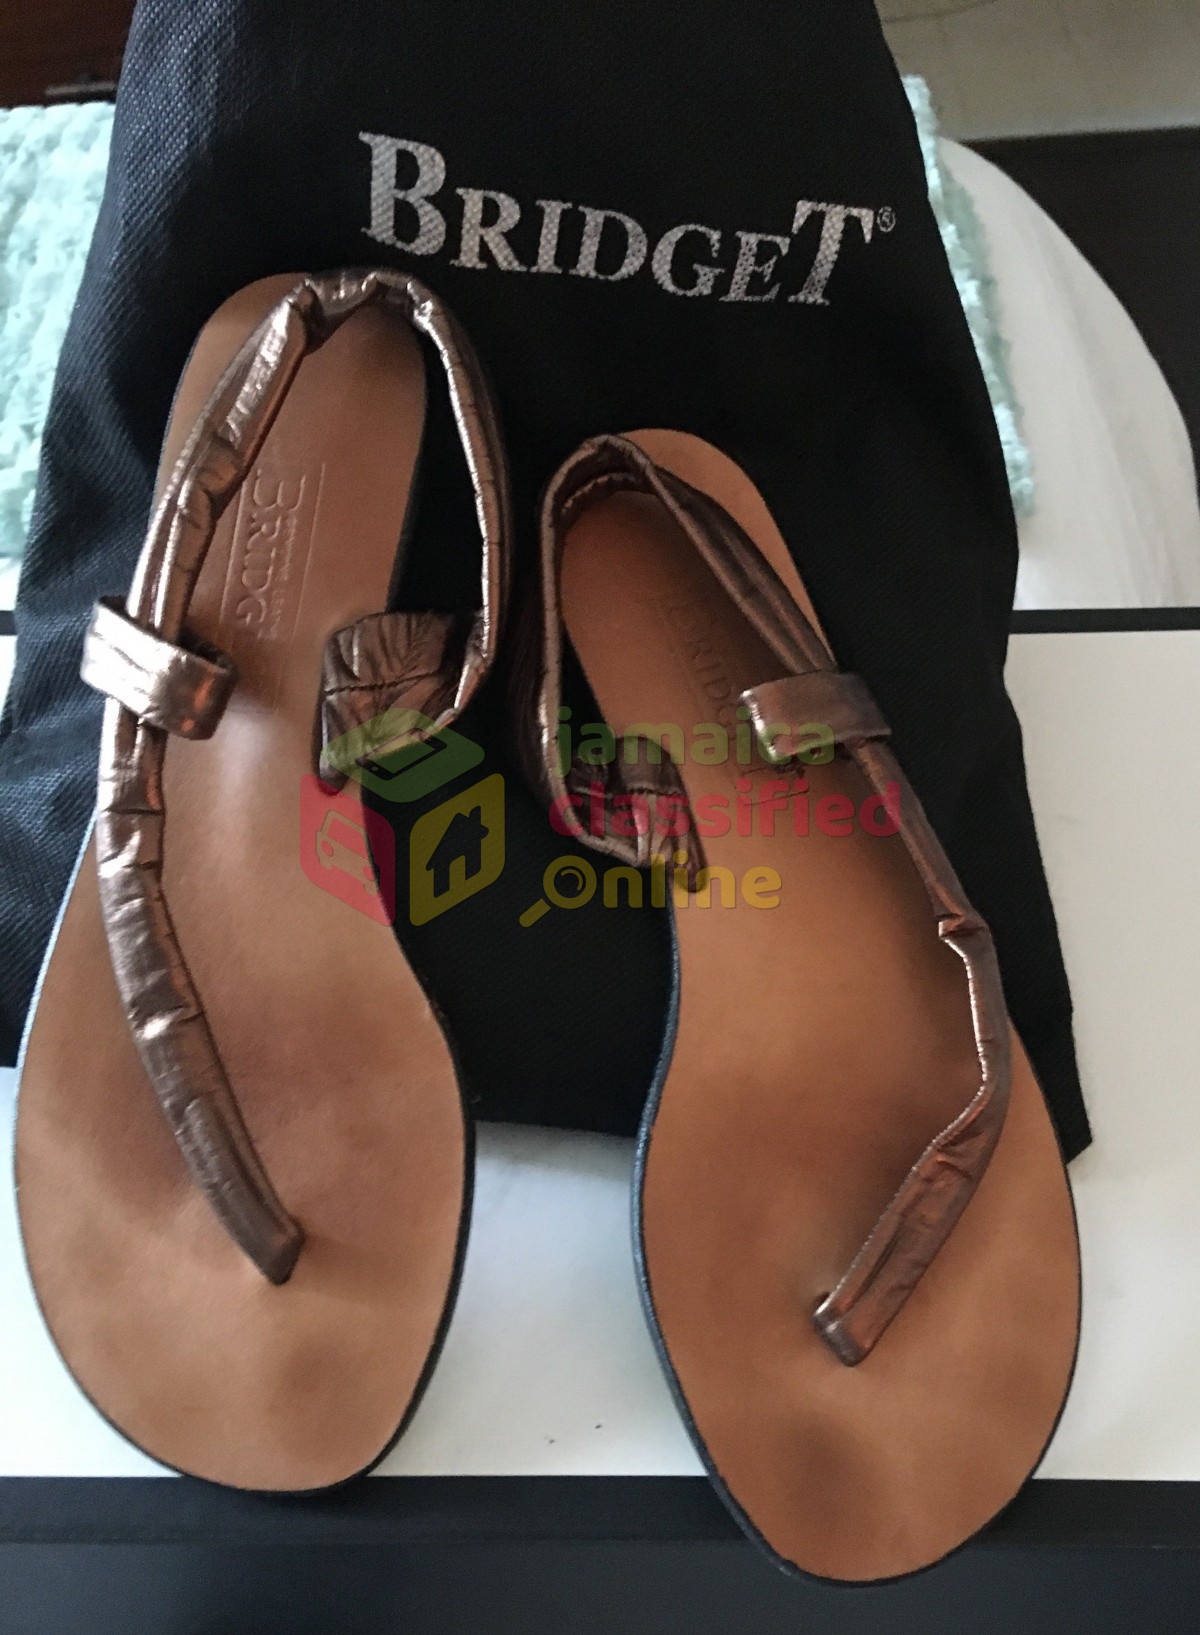 Authentic Bridget Sandals for sale in 